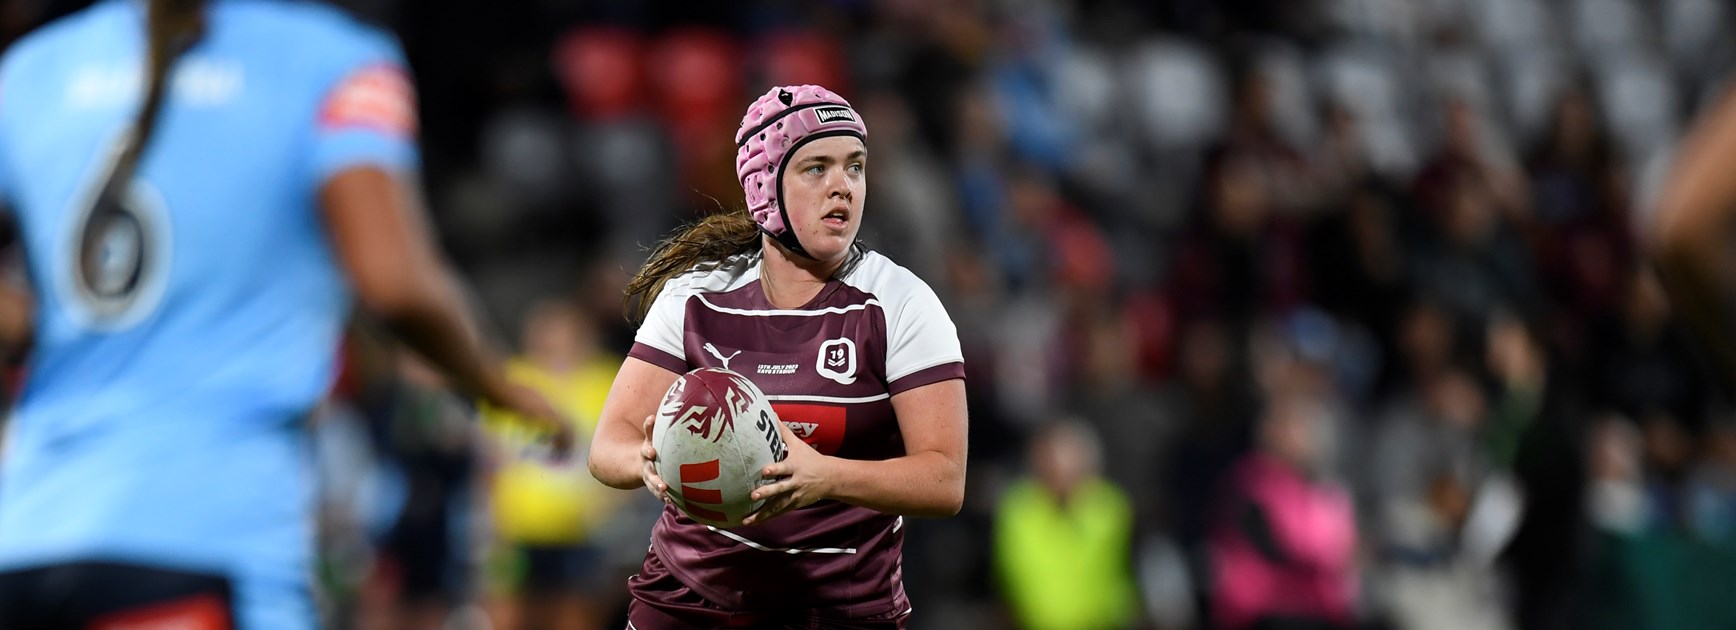 Queensland Under 19 women’s squad named